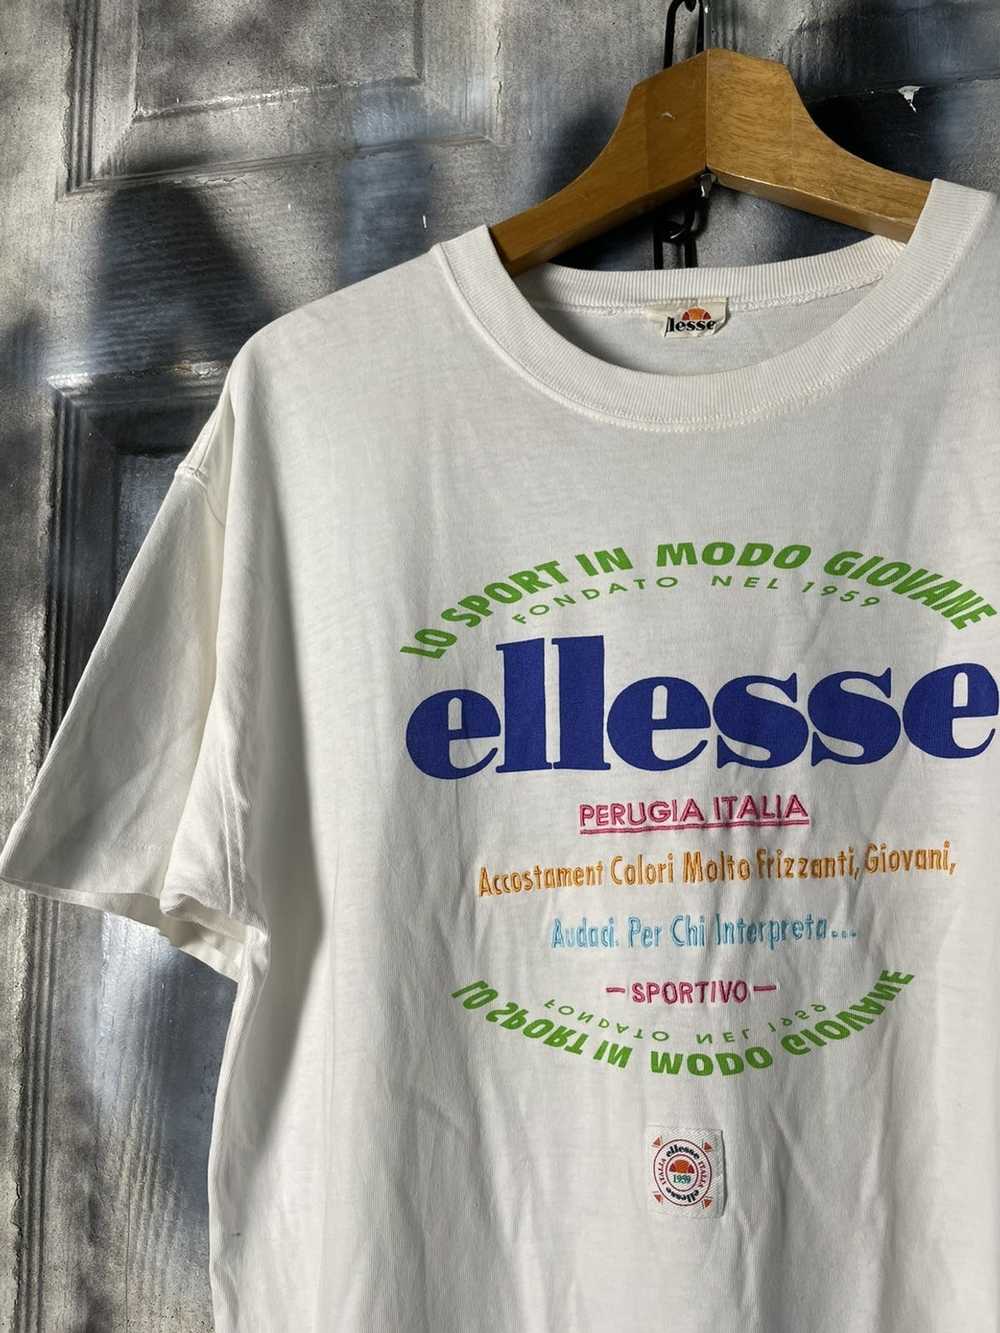 Gem t-shirt - Vintage italia ellesse